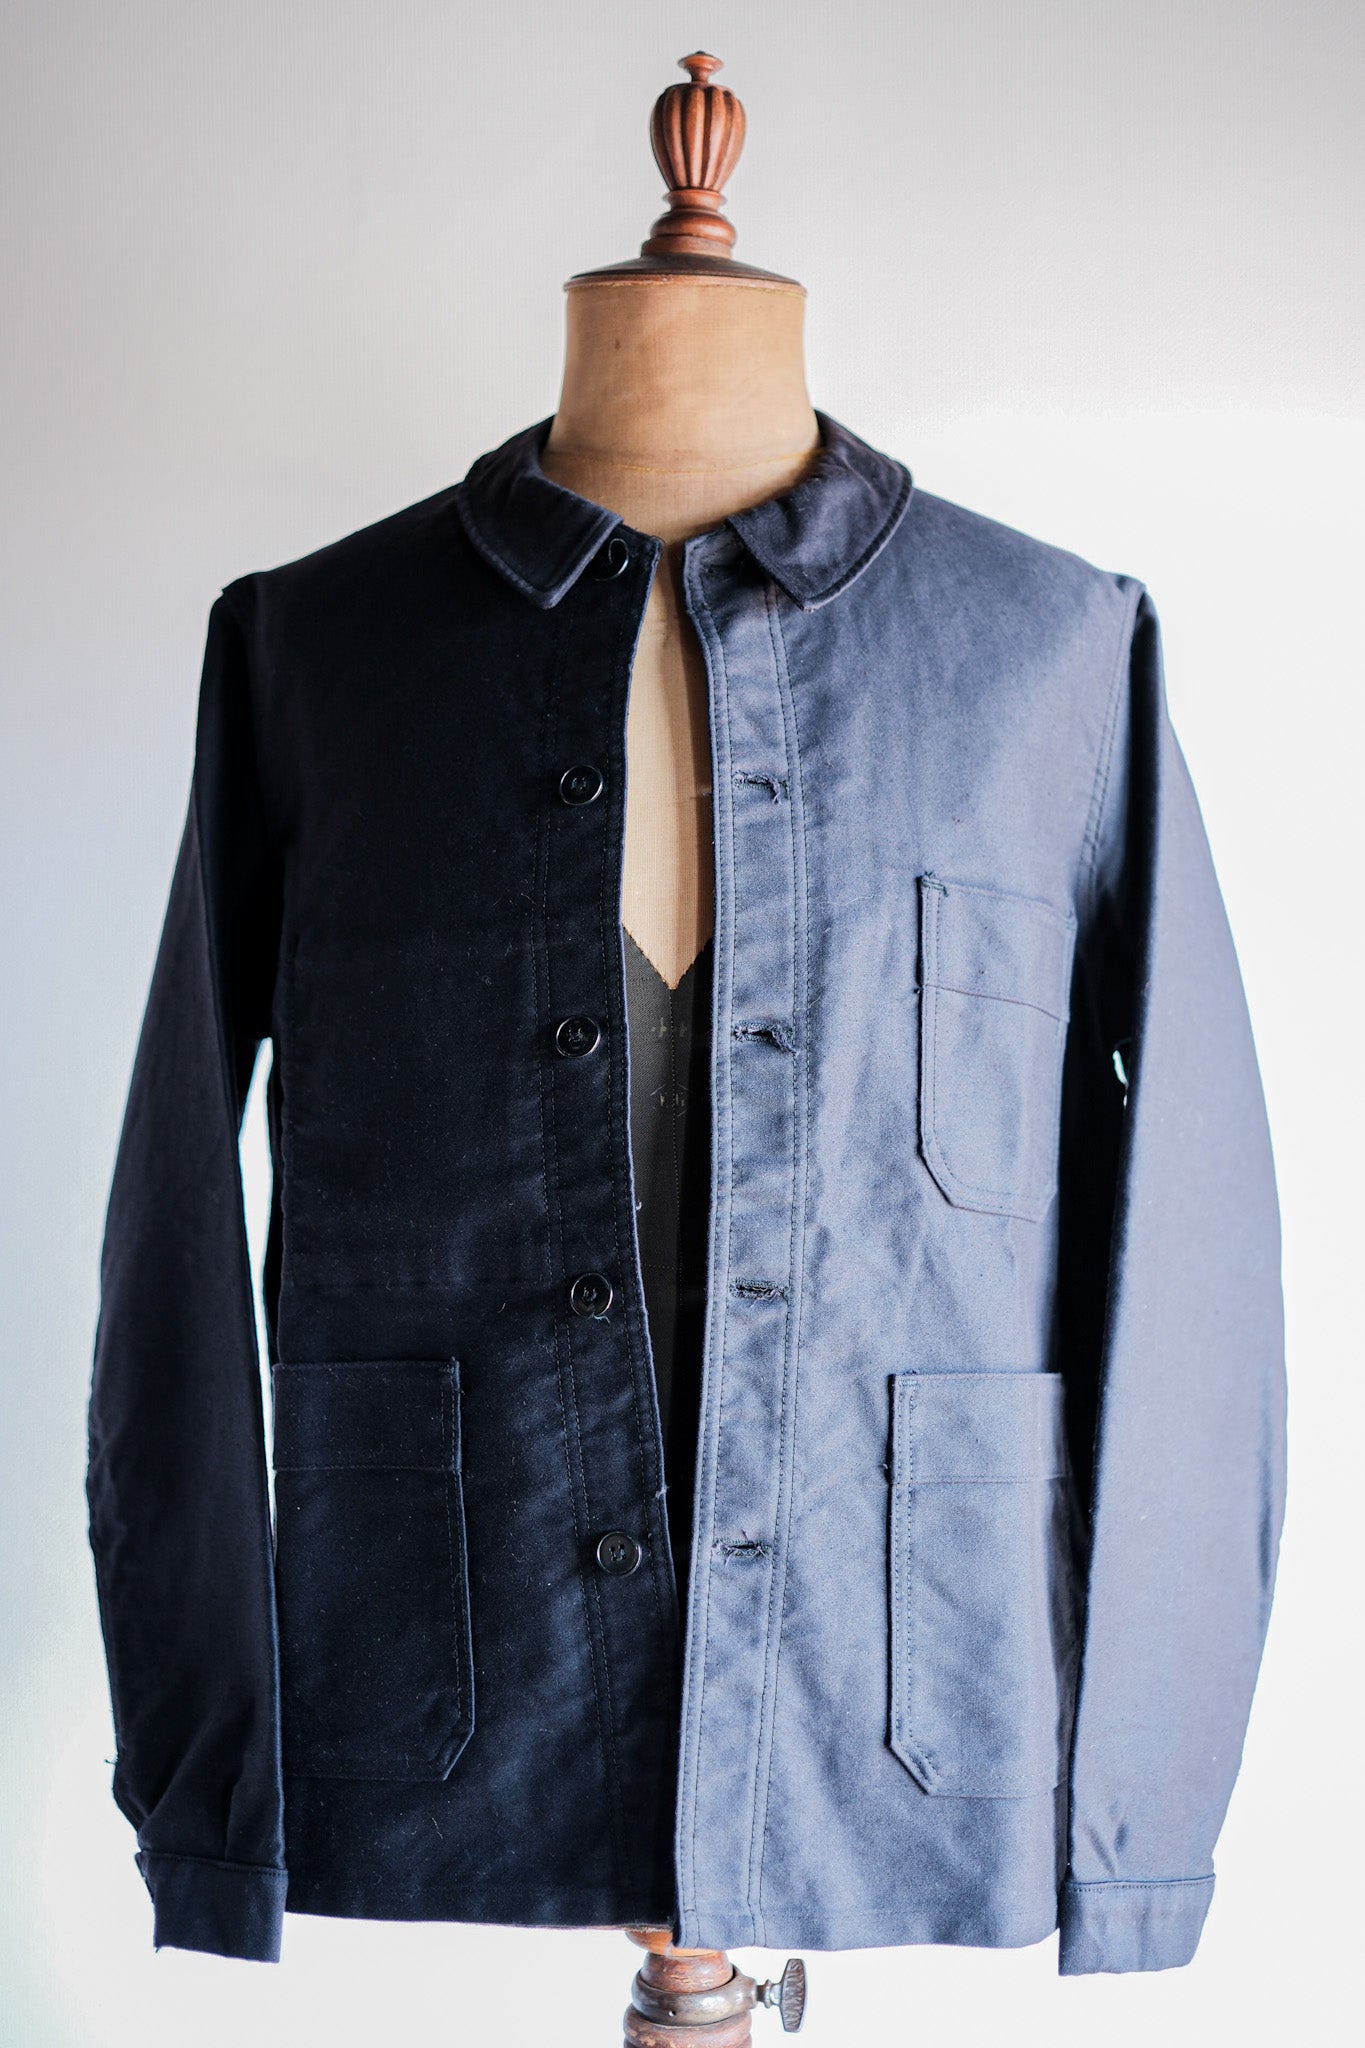 [~ 60's] French vintage noire moleskin work veste taille.50 "Le Mont Stockel" "Dead Stock"